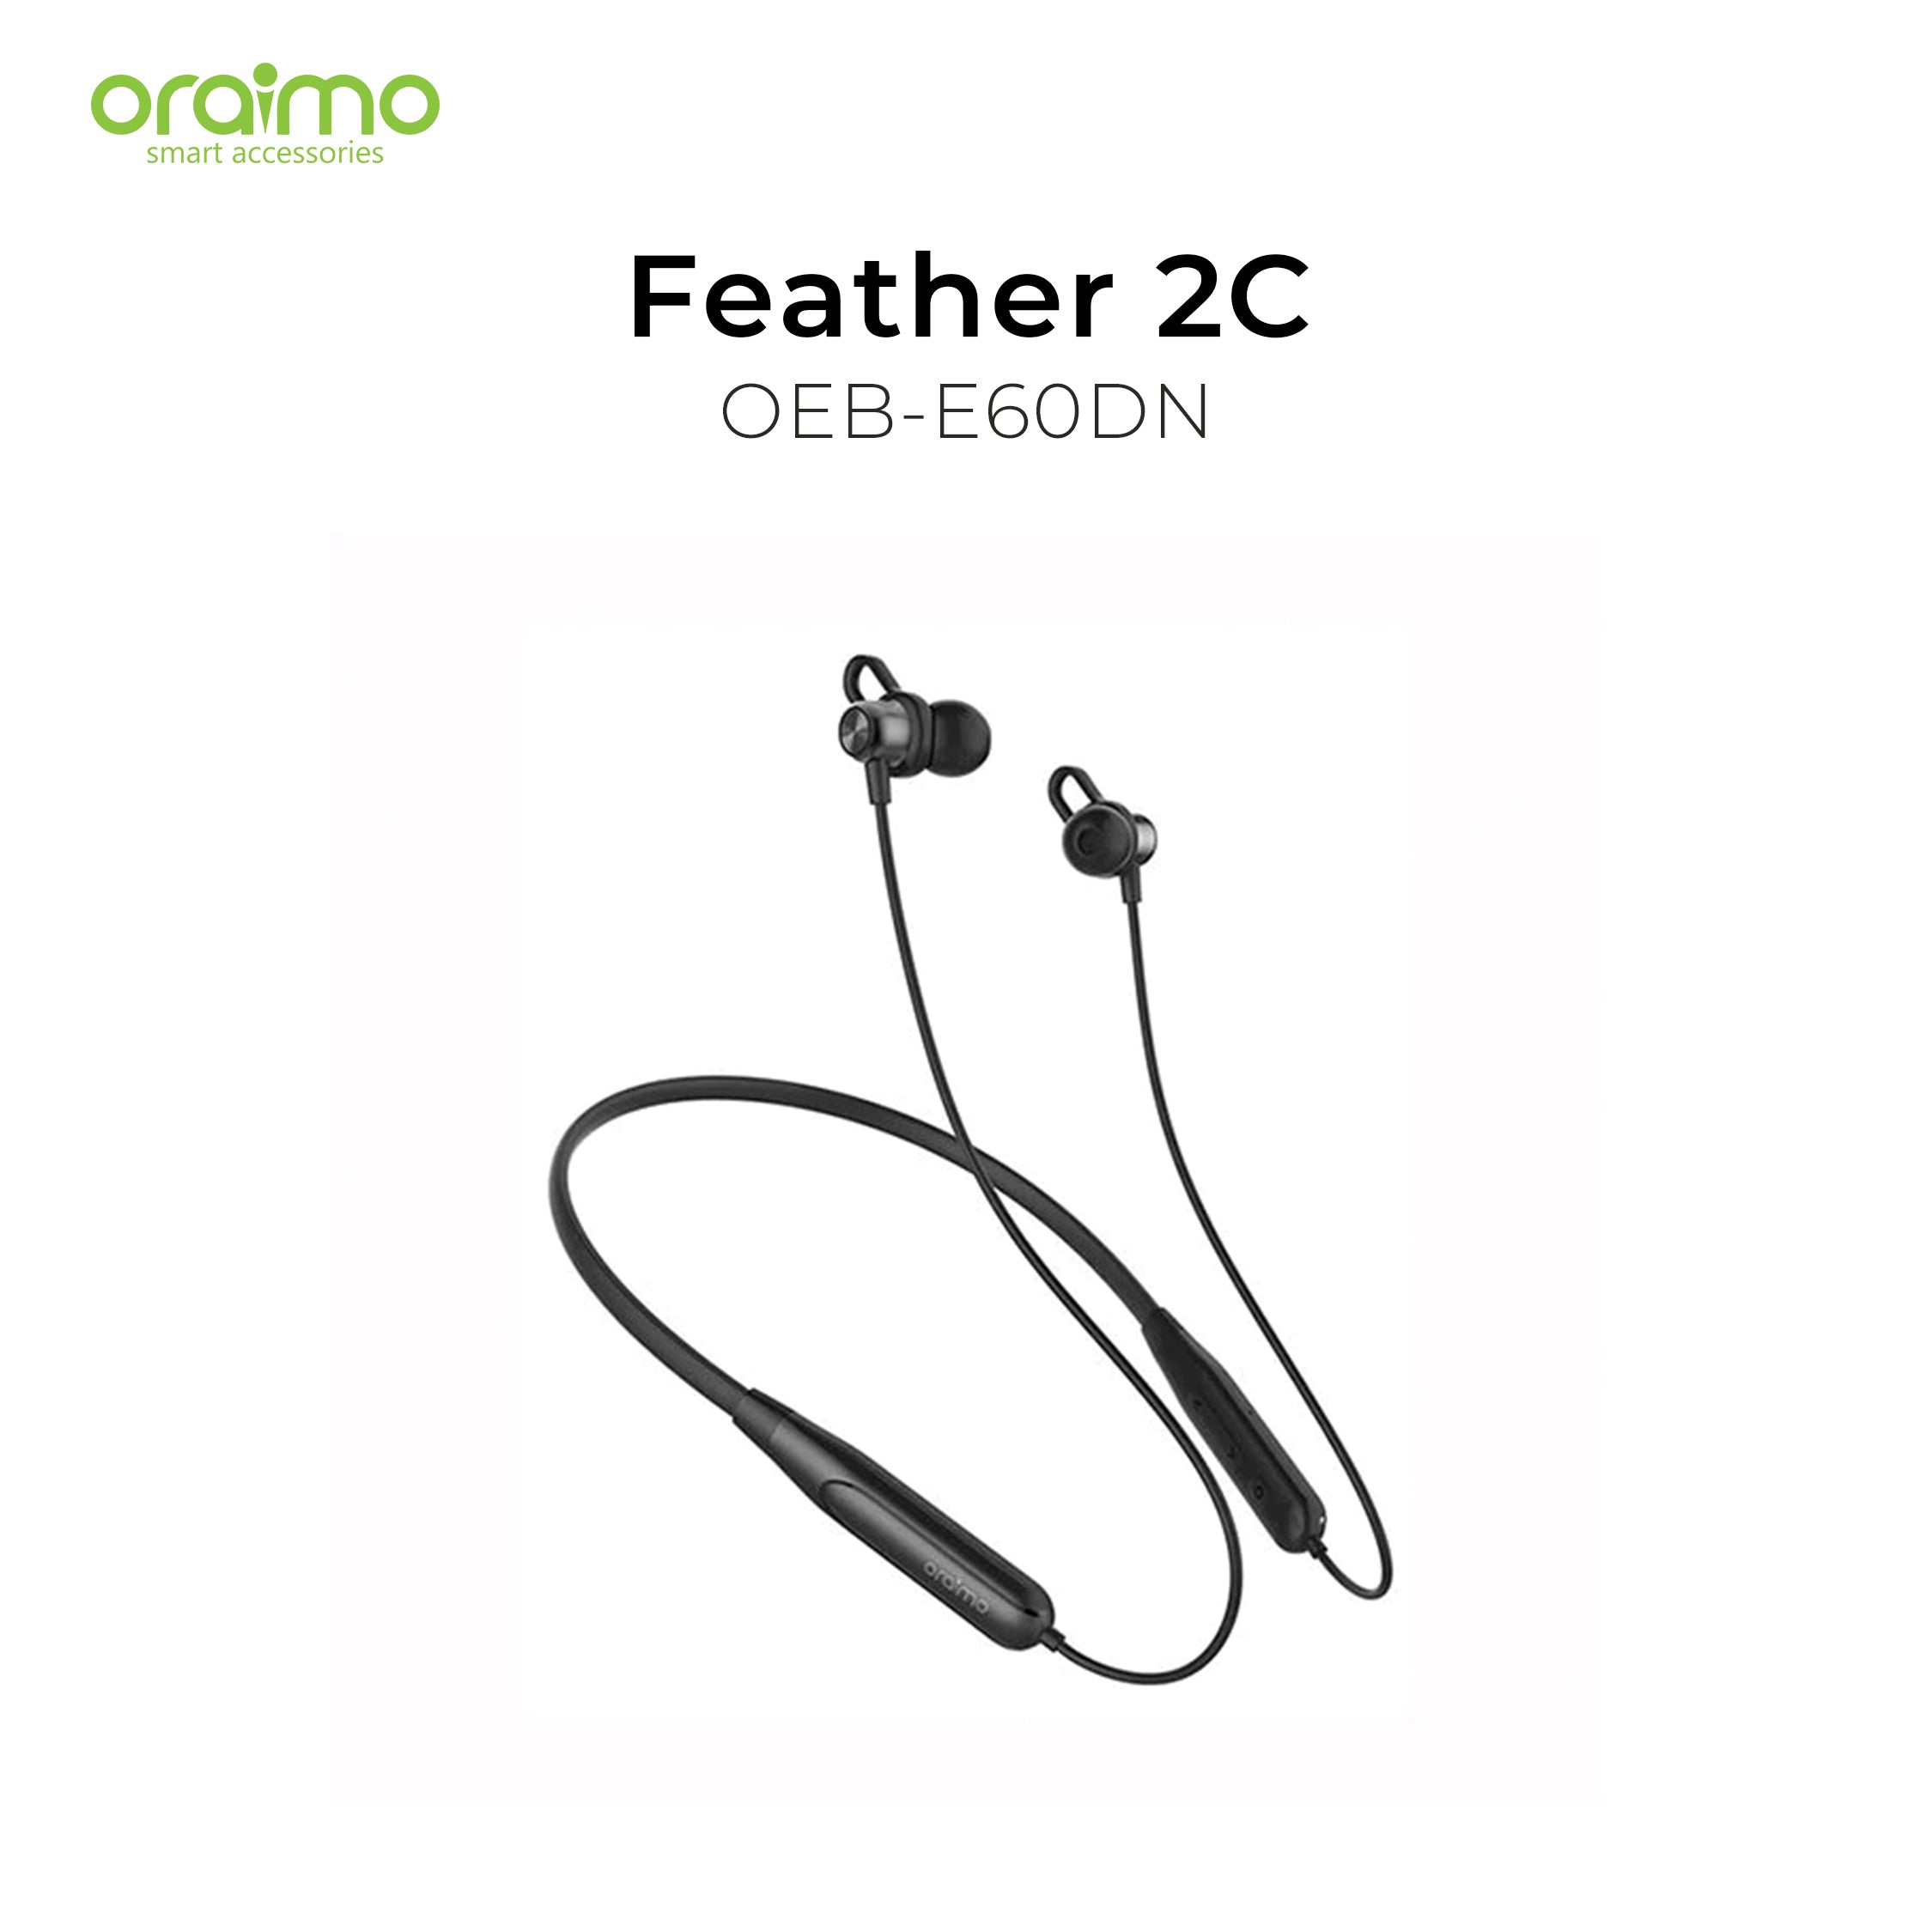 Oraimo Feather 2C Wireless Earphones OEB-E60DN